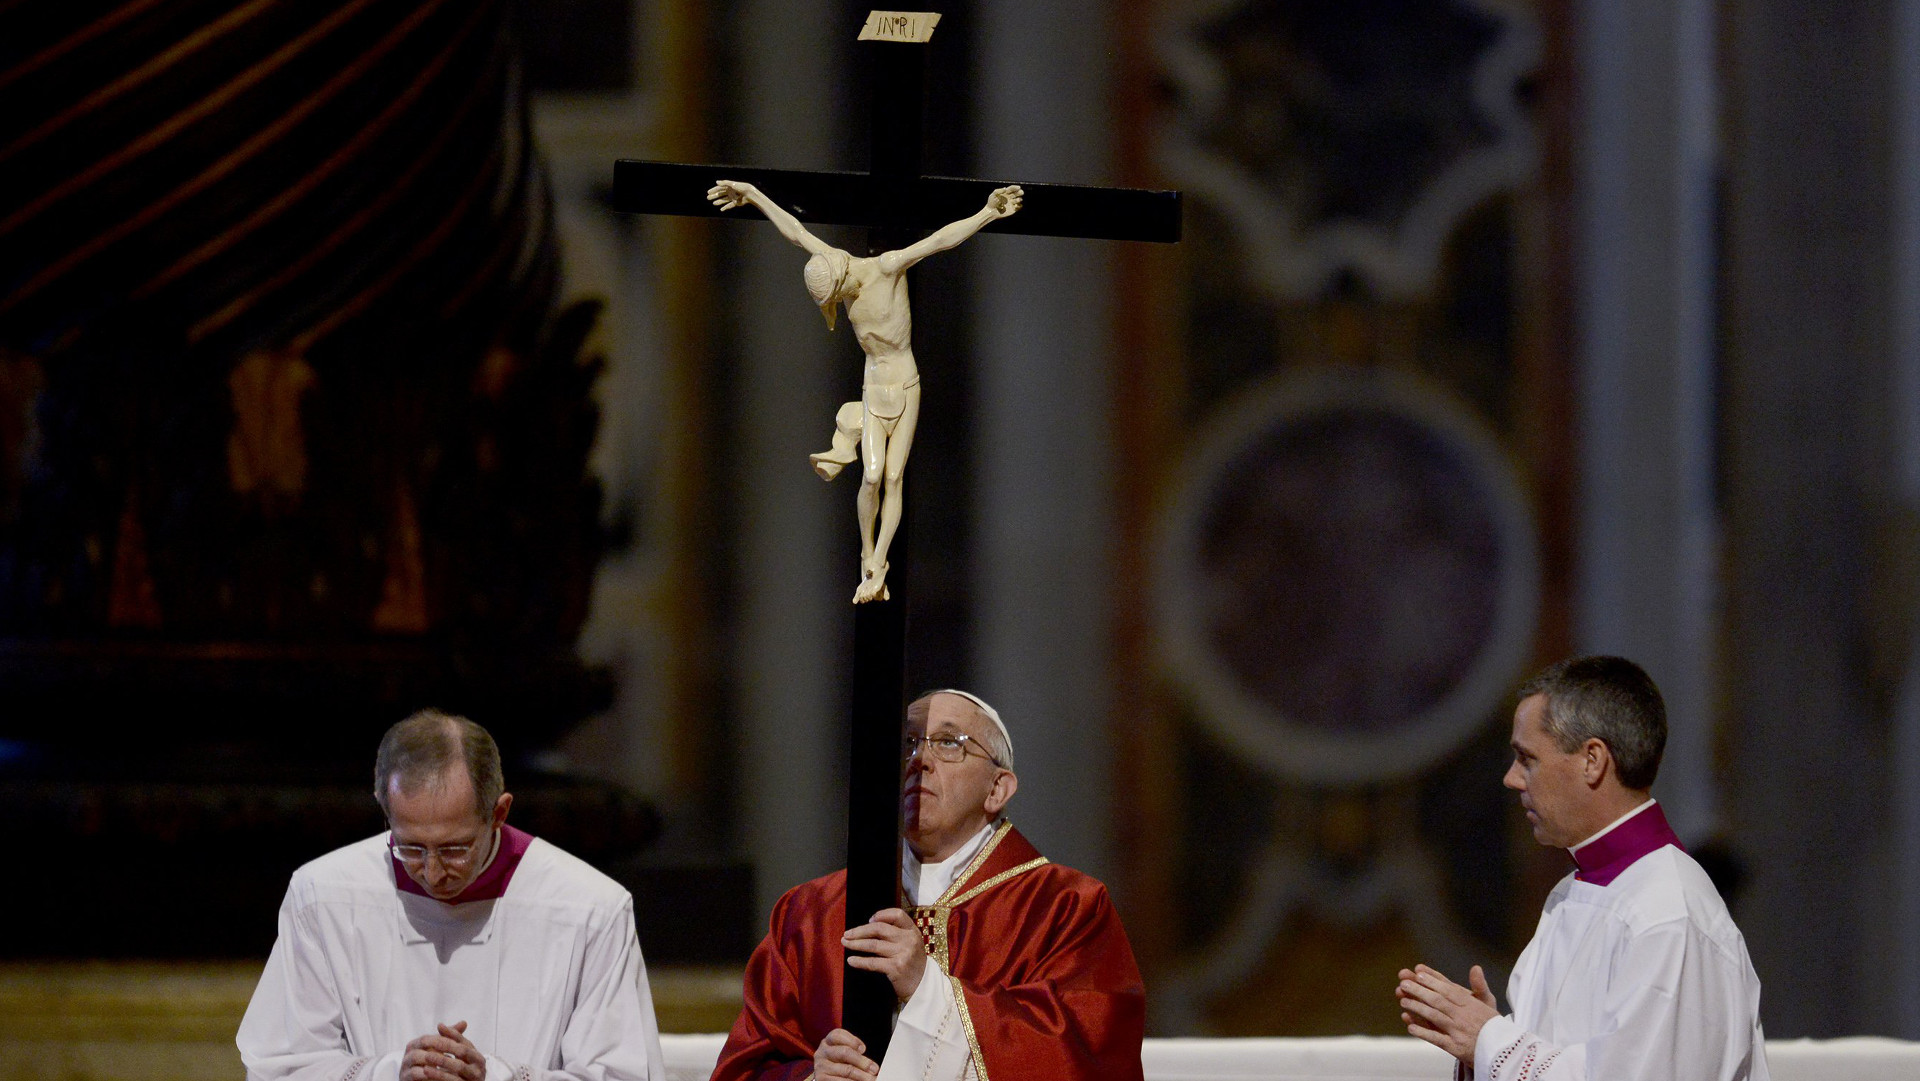 Papst Franziskus hält das Kreuz bei der Karfreitagsliturgie am 3. April 2015 im Petersdom in Rom.